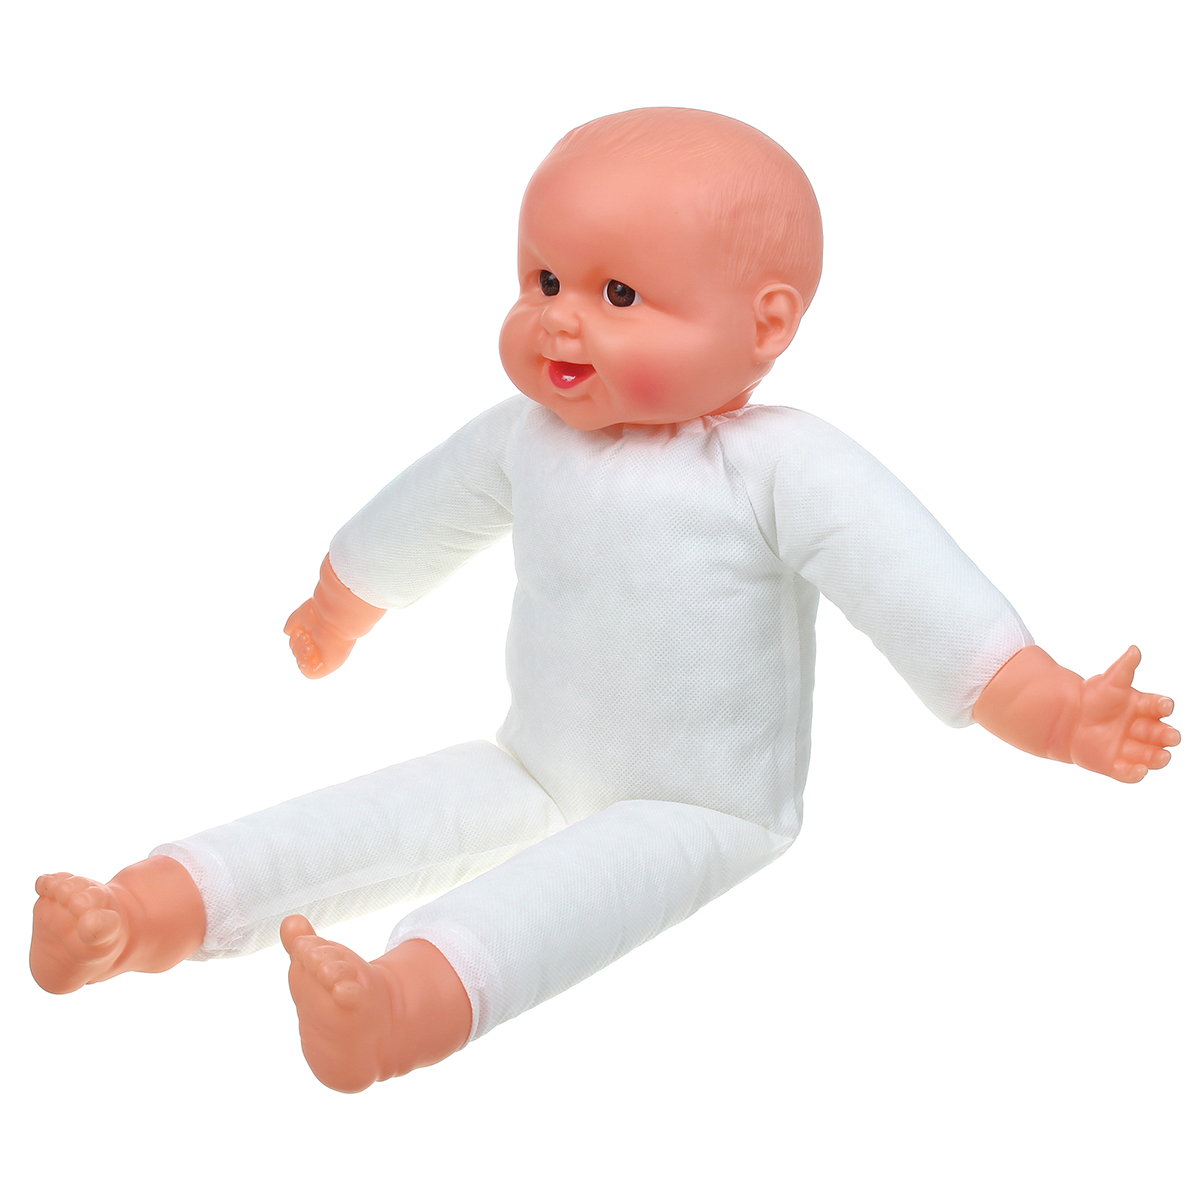 50CM-Multi-color-Simulation-Silicone-Vinyl-Lifelike-Realistic-Reborn-Newborn-Baby-Doll-Toy-with-Clot-1815387-8